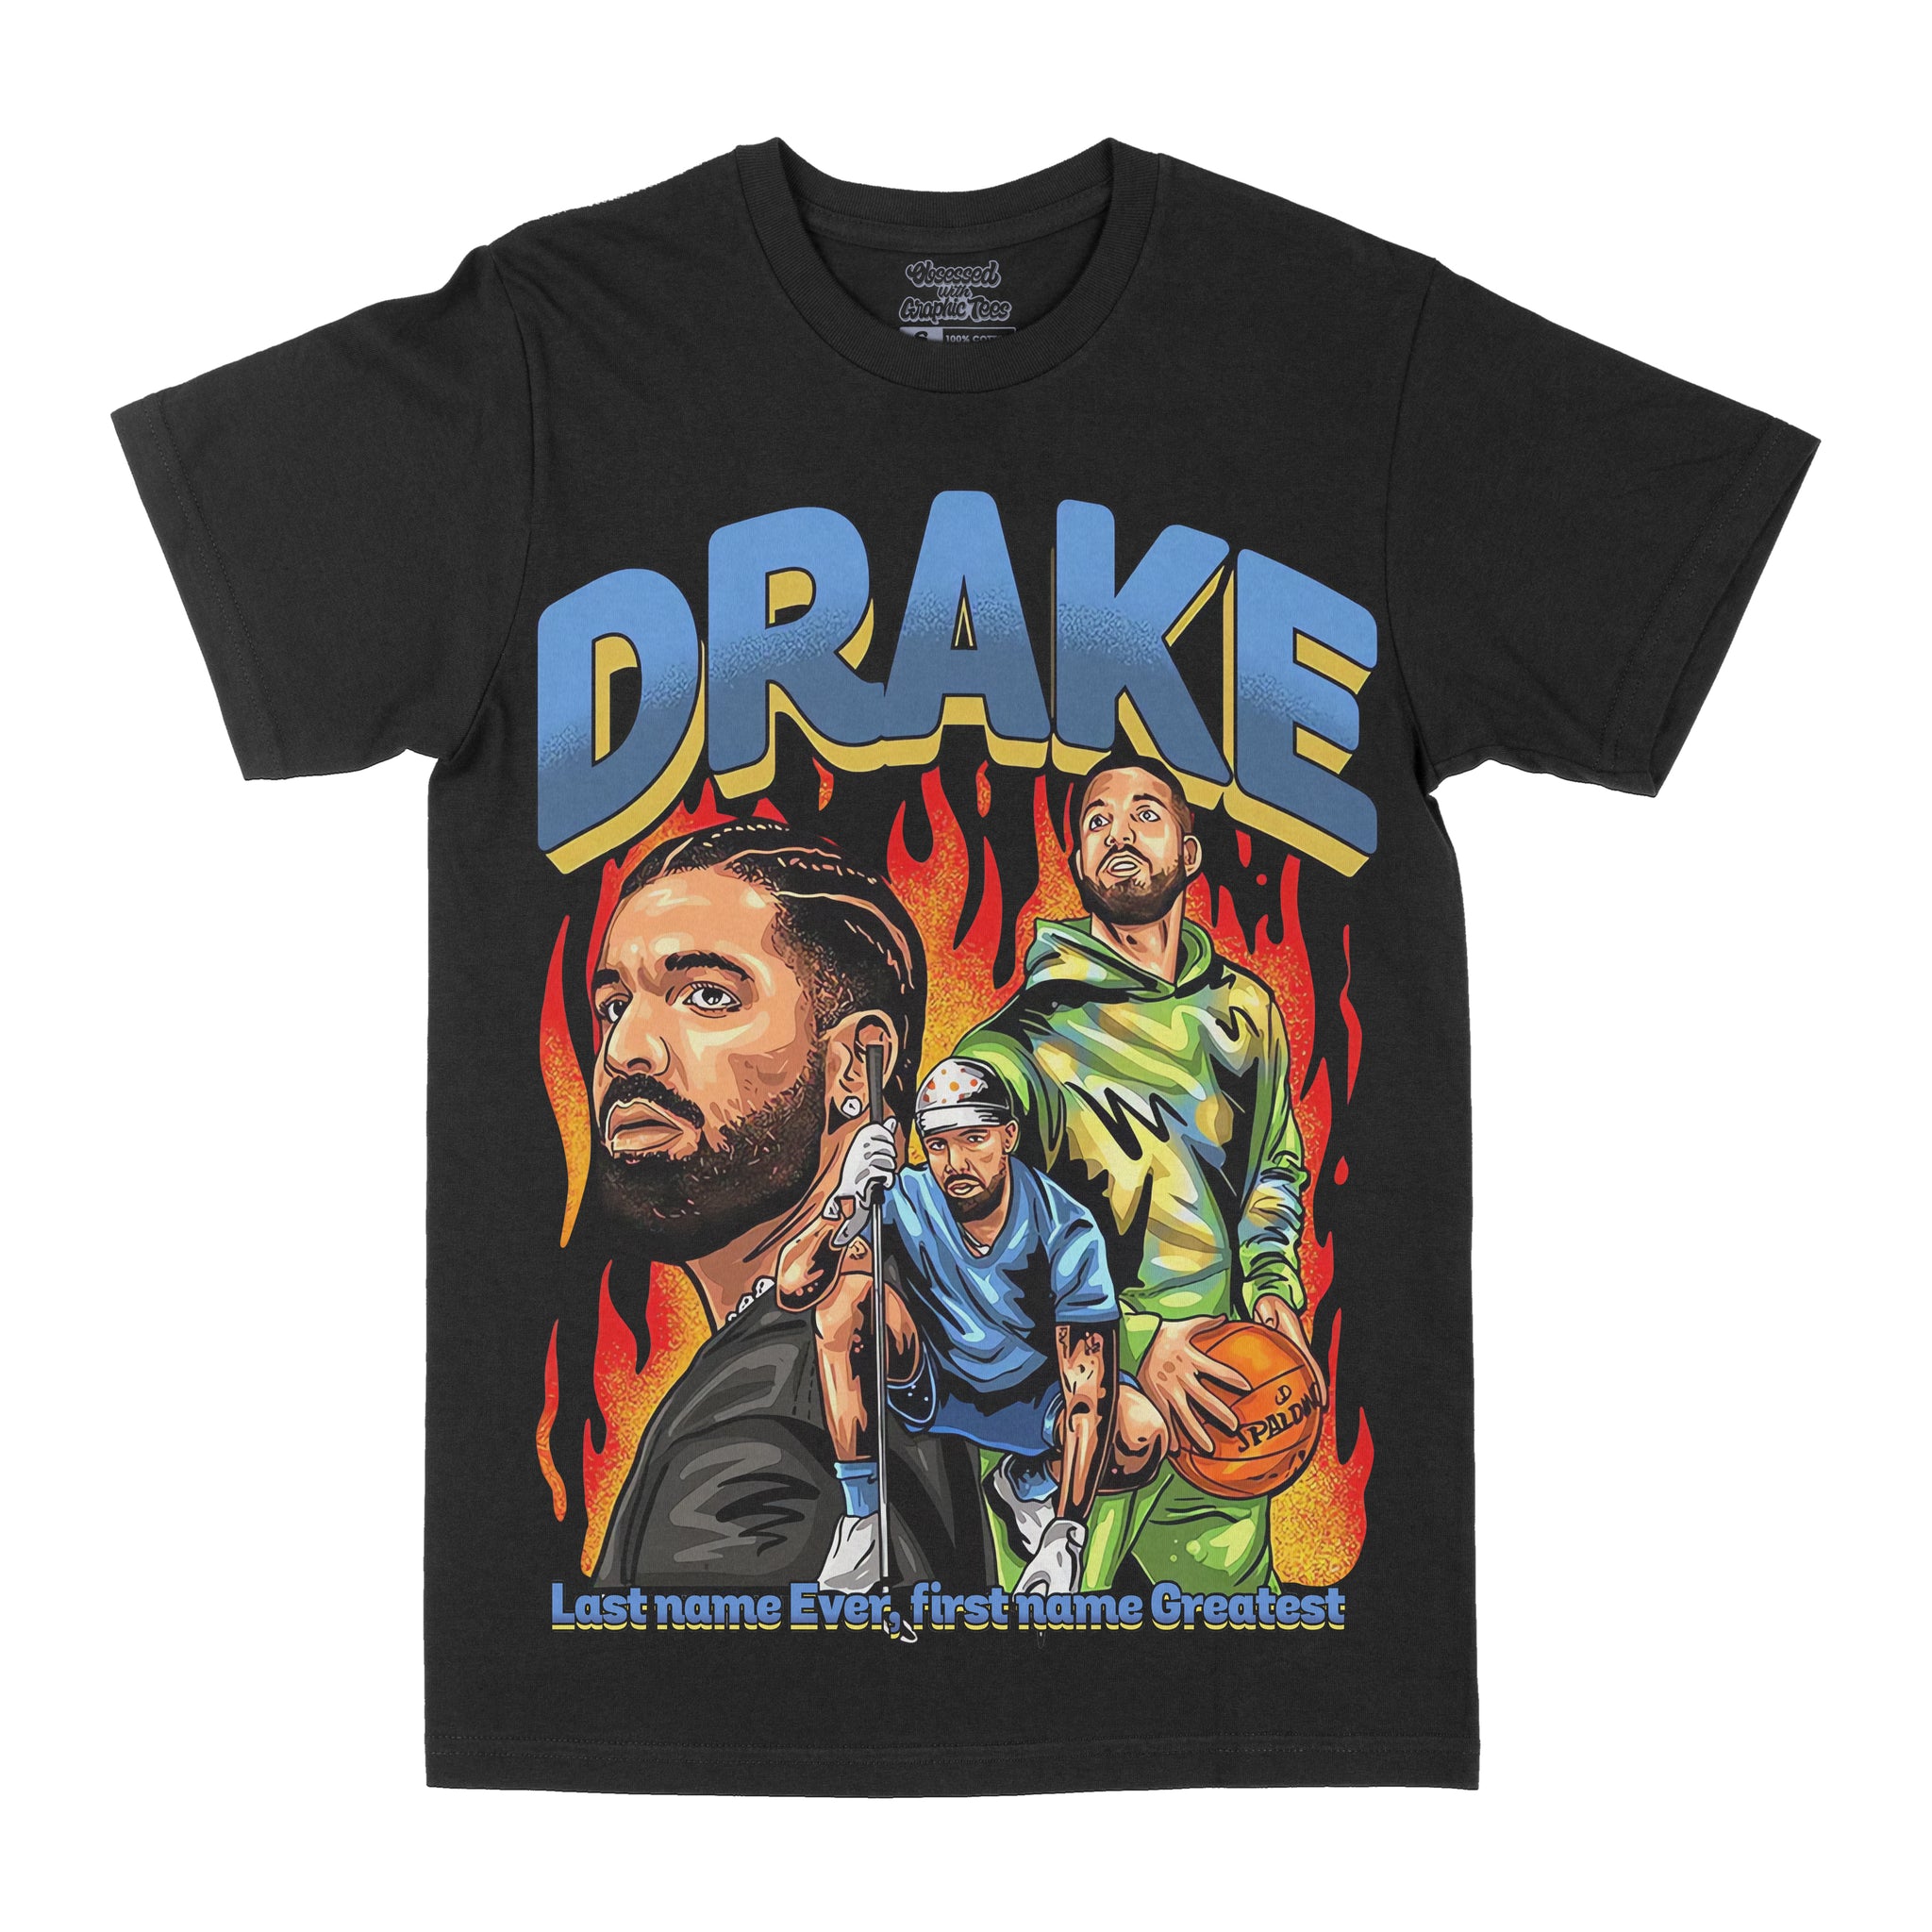 Drake "Greatest" Graphic Tee